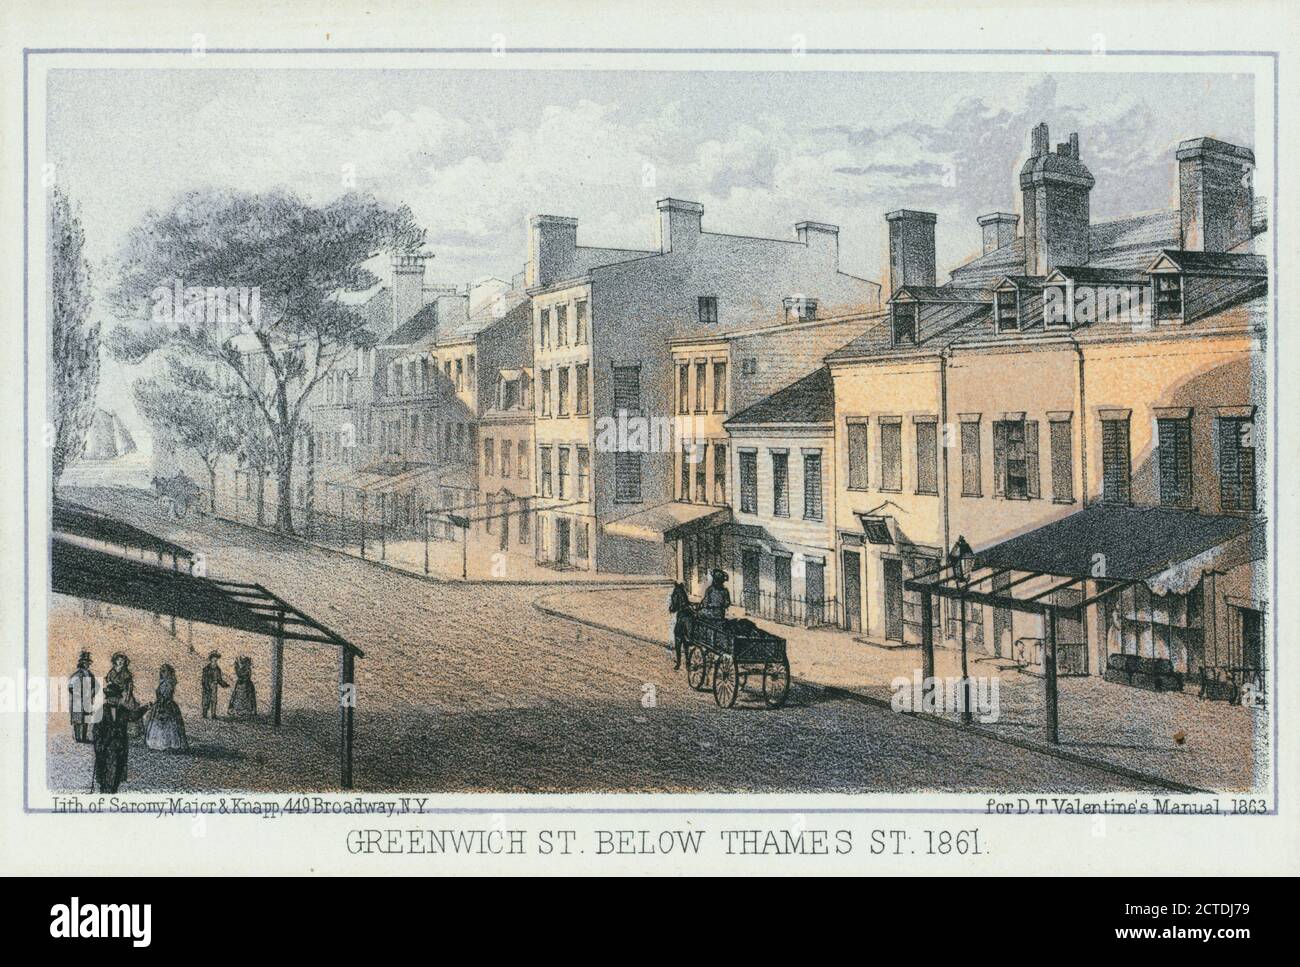 Greenwich St. below Thames St., 1861., still image, Prints, 1863, Sarony, Major & Knapp Lith Stock Photo